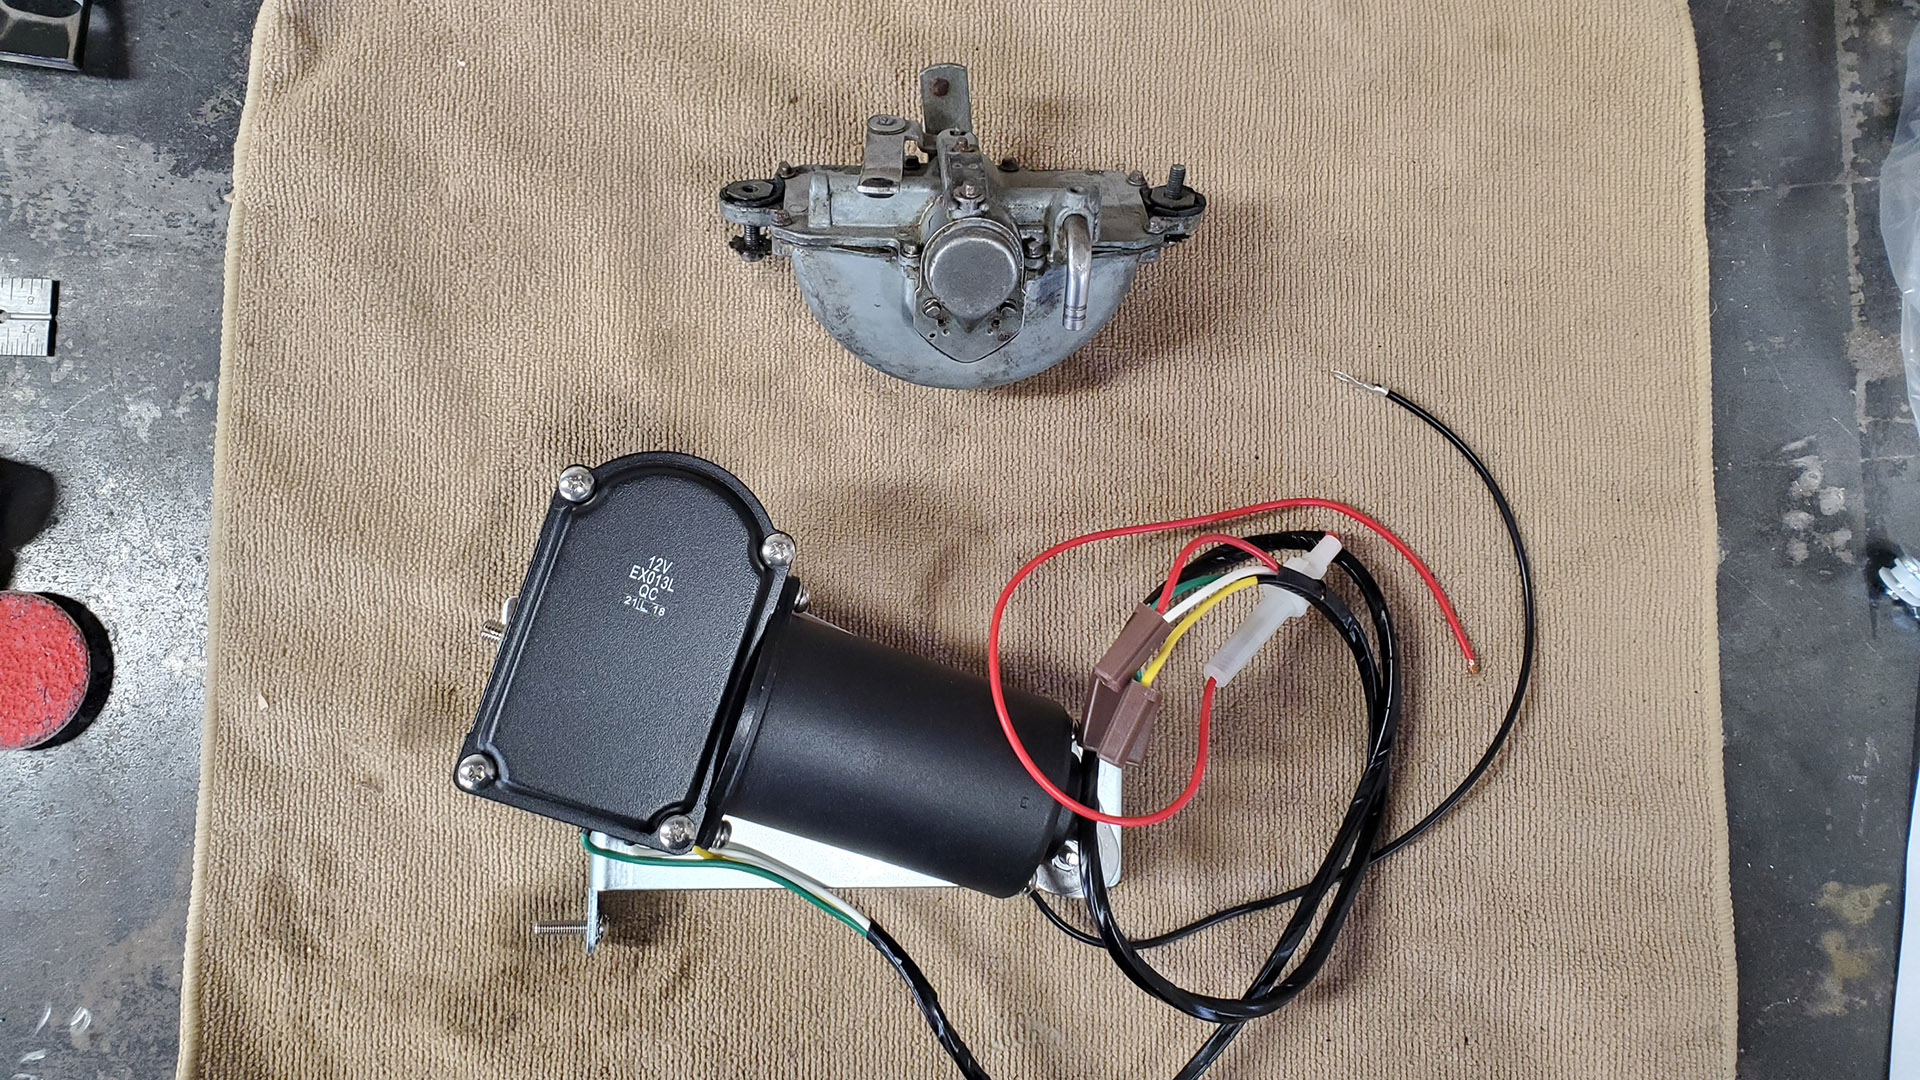 Original vacuum motor (top) and electric converion motor (bottom)